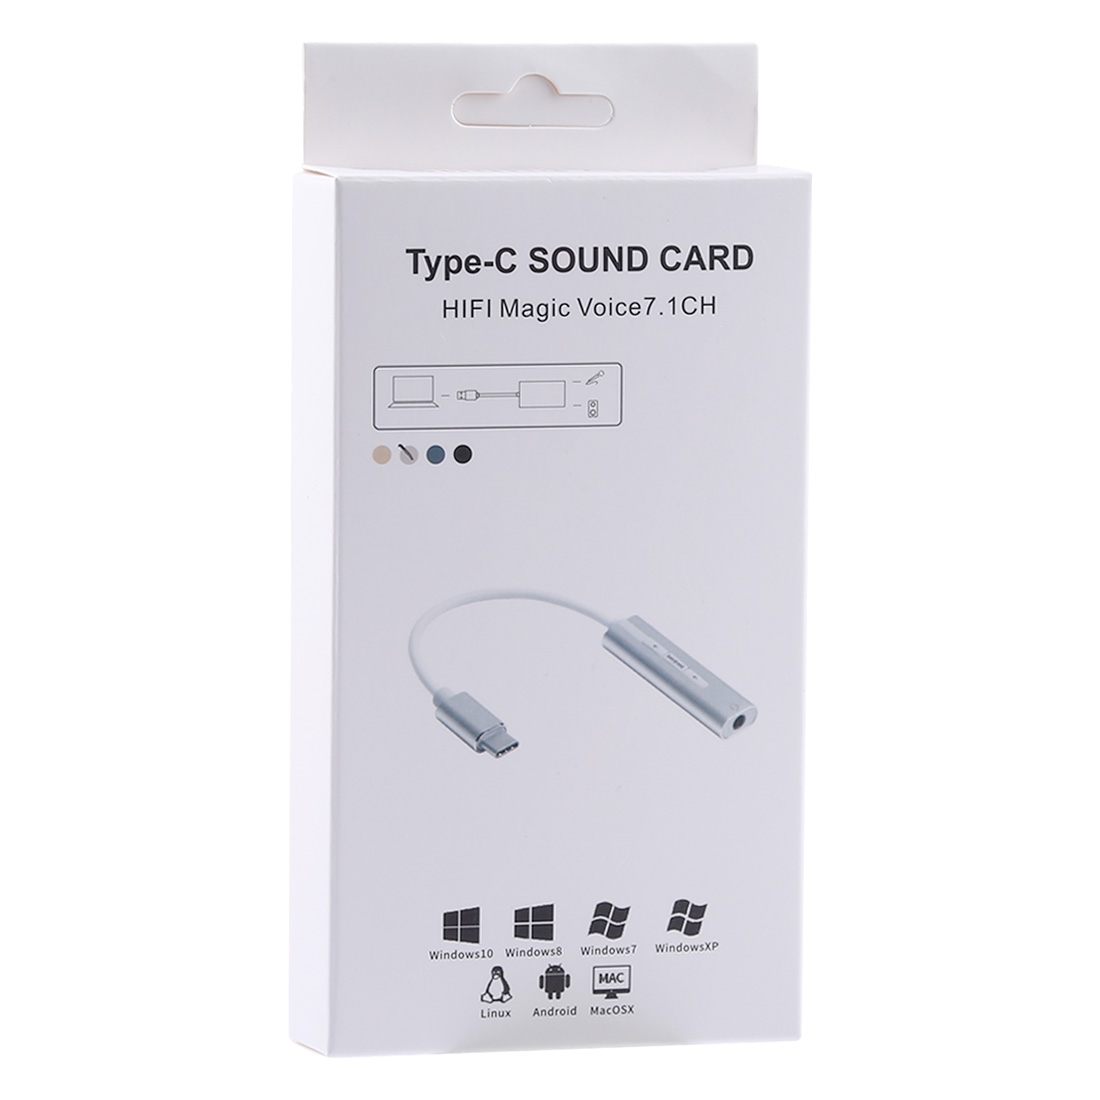 HiFi 7 1CH Sound Card Type C%20%20(3)